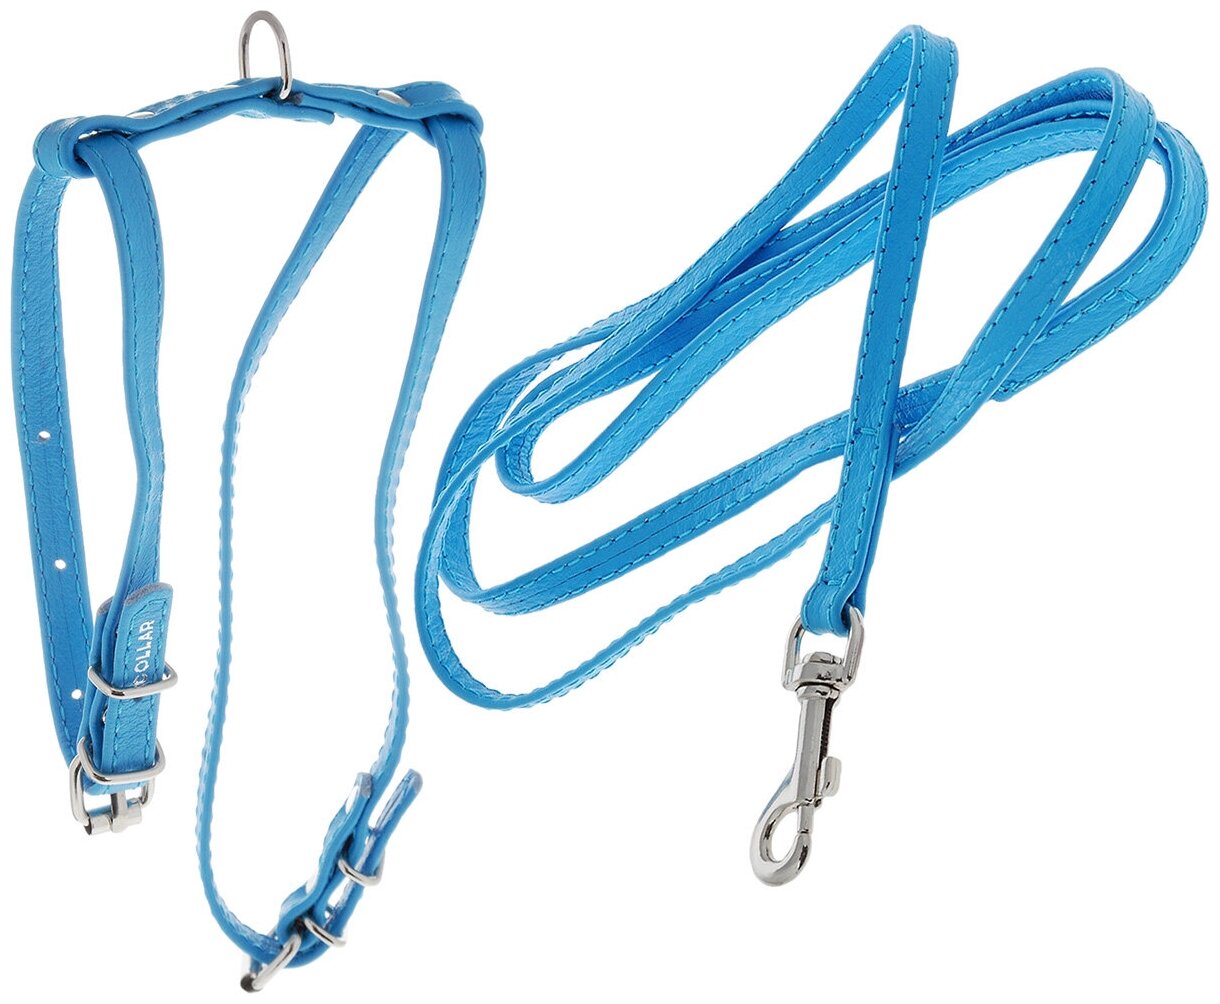 Collar шлея кожаная Glamour с поводком ширина 10 мм., Синий - фотография № 2